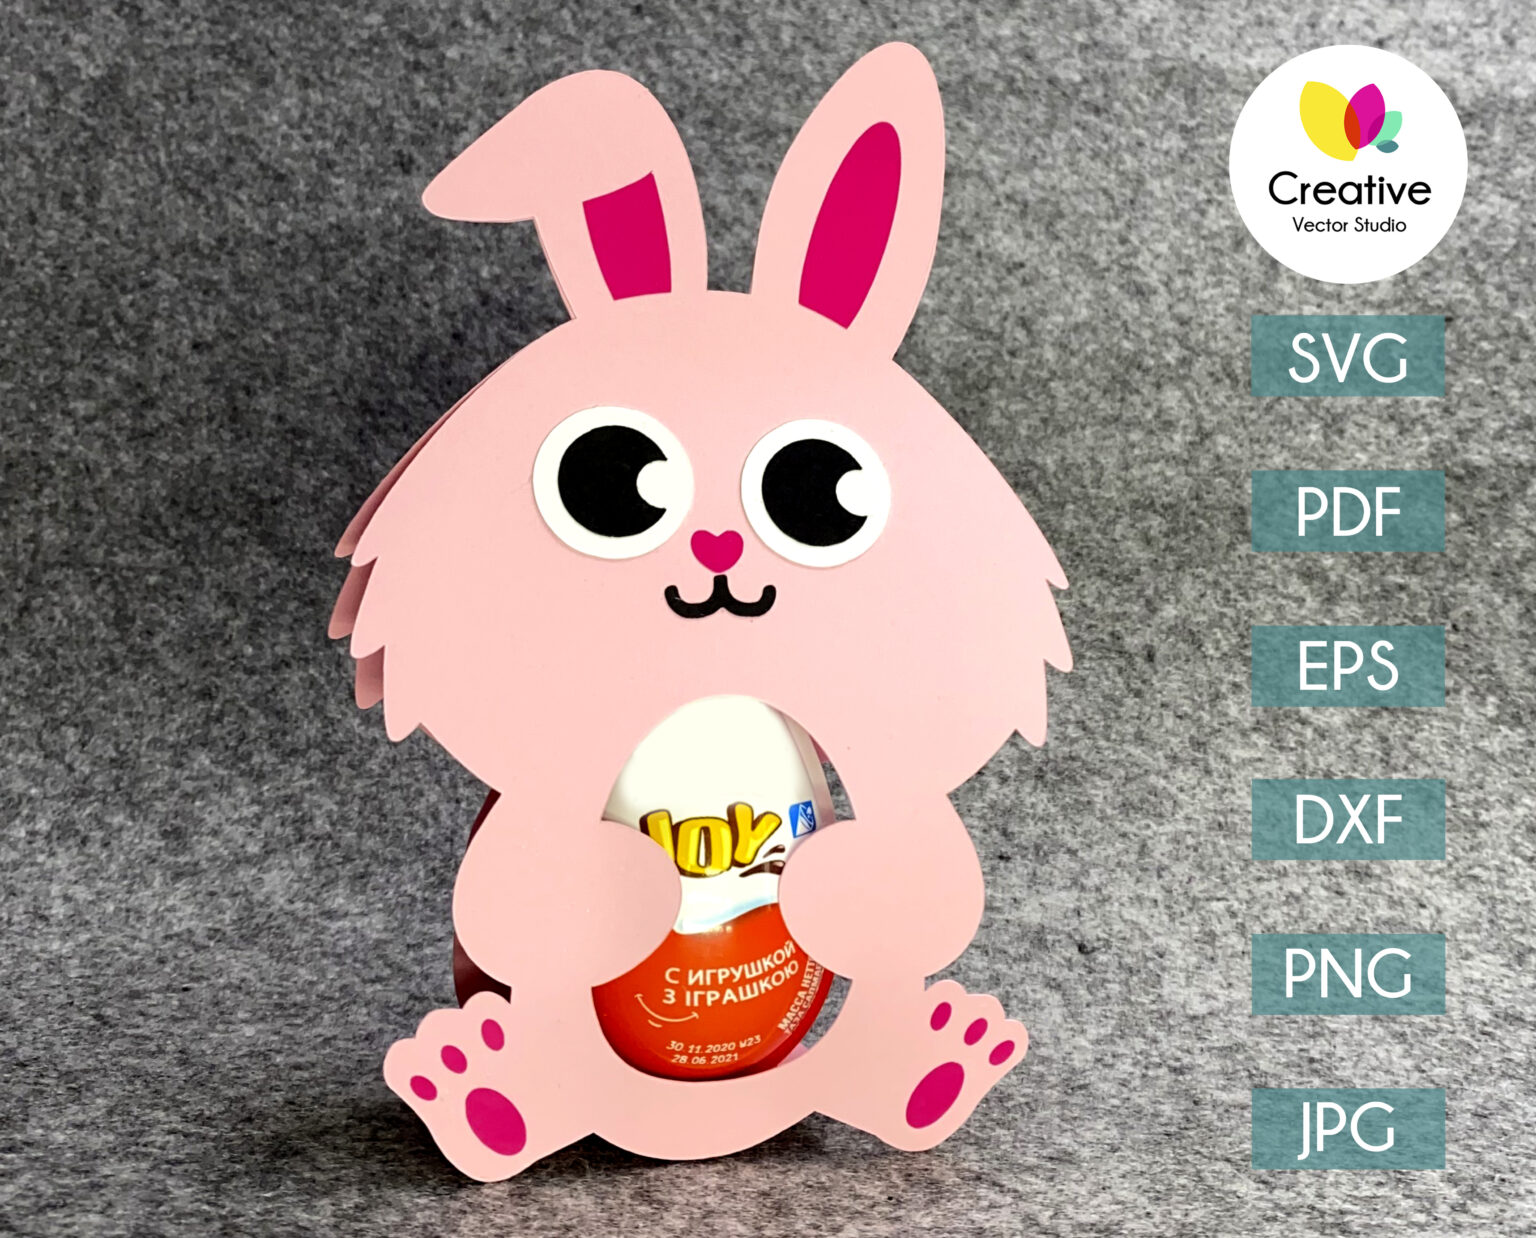 Bunny Easter Egg Holder SVG Cut File - Creative Vector Studio